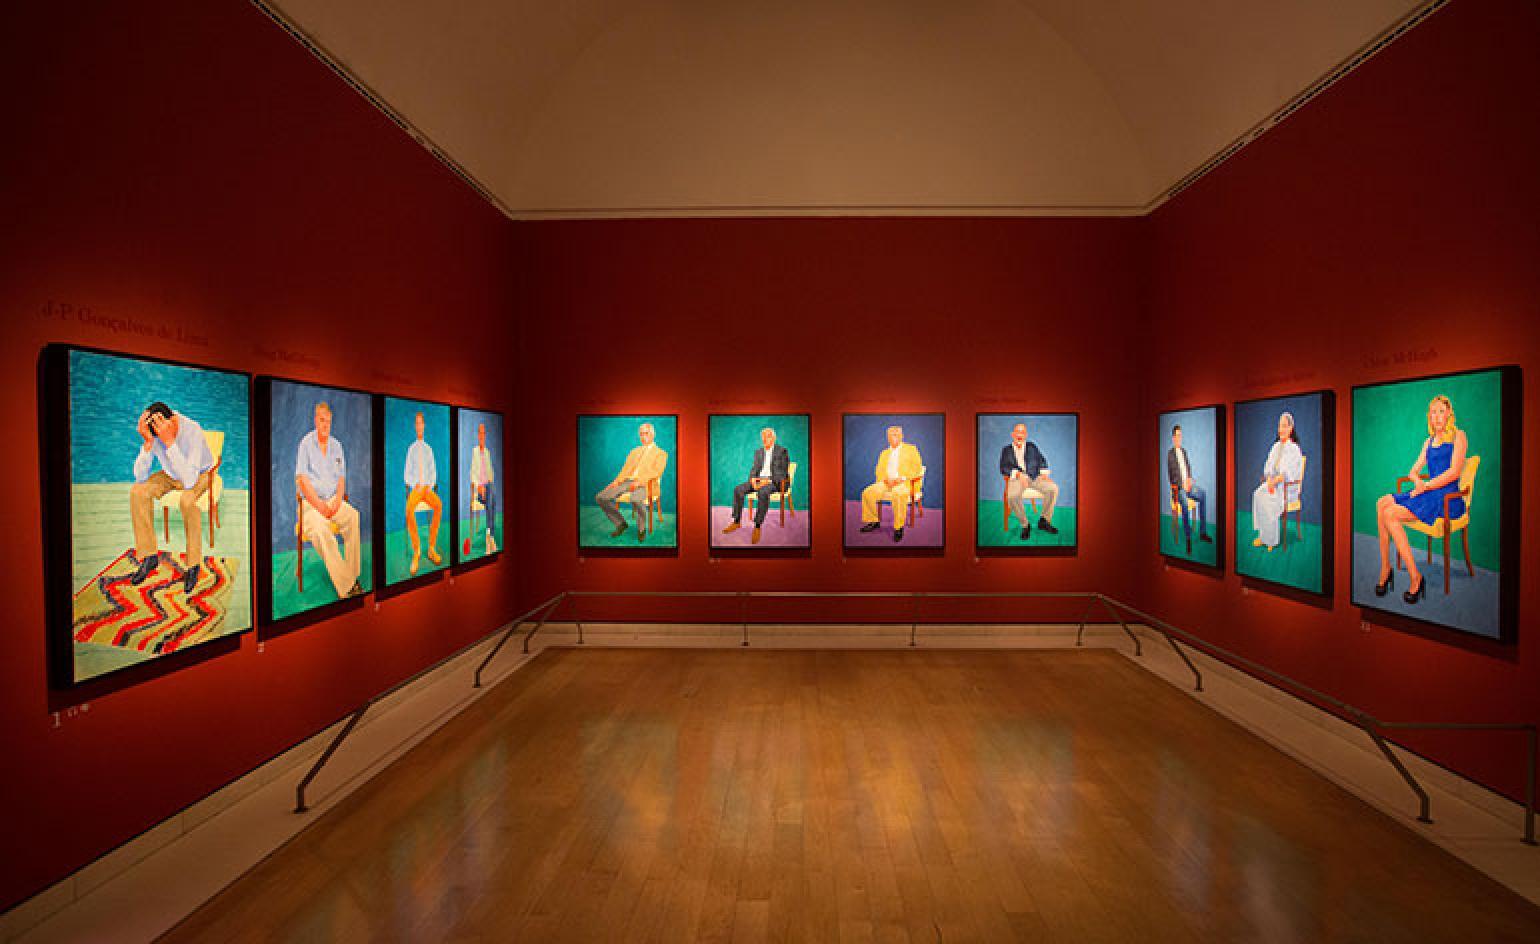 Portraits And 1 Still Life': David Hockney At The RA. Wallpaper*